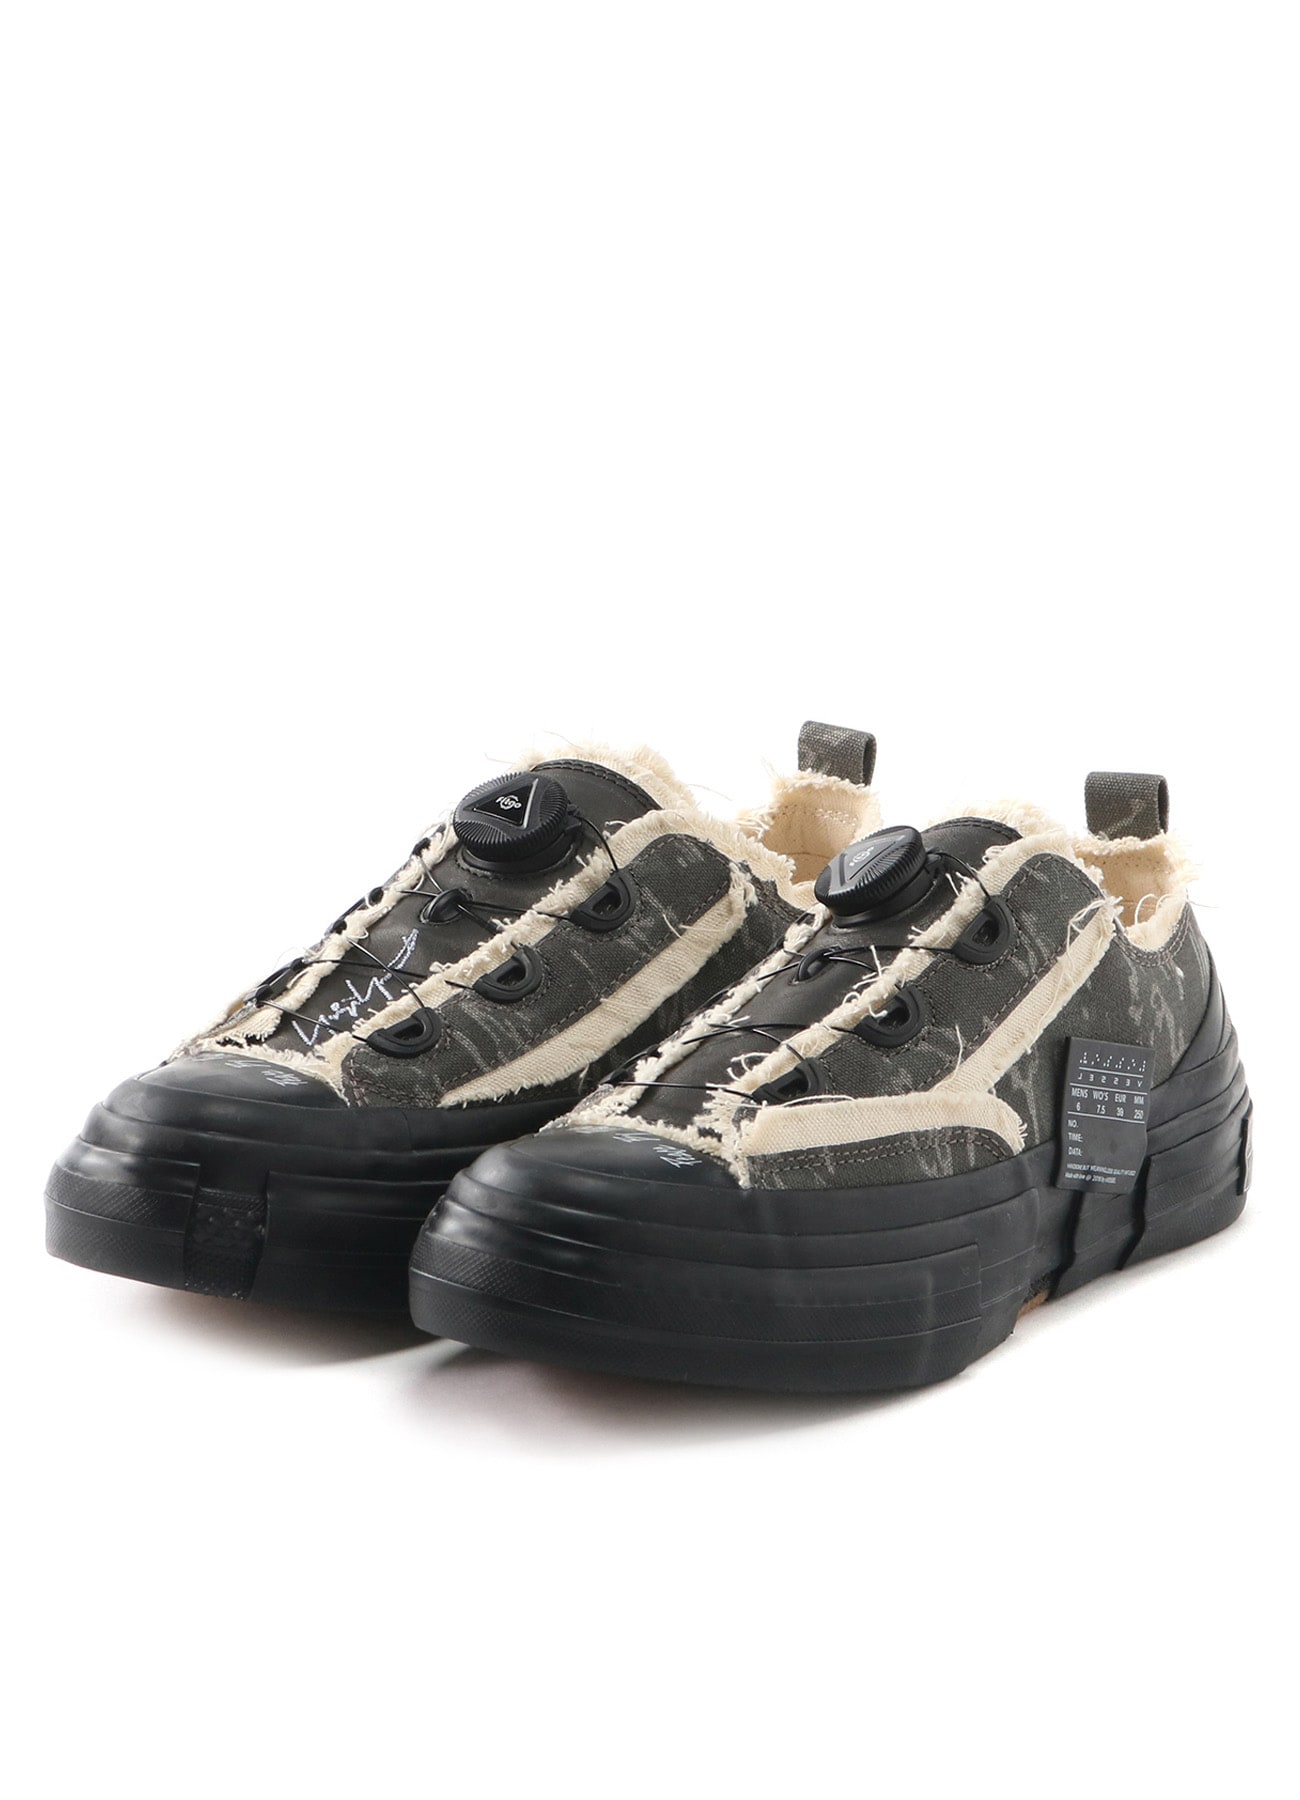 yohji yamamoto mens shoes